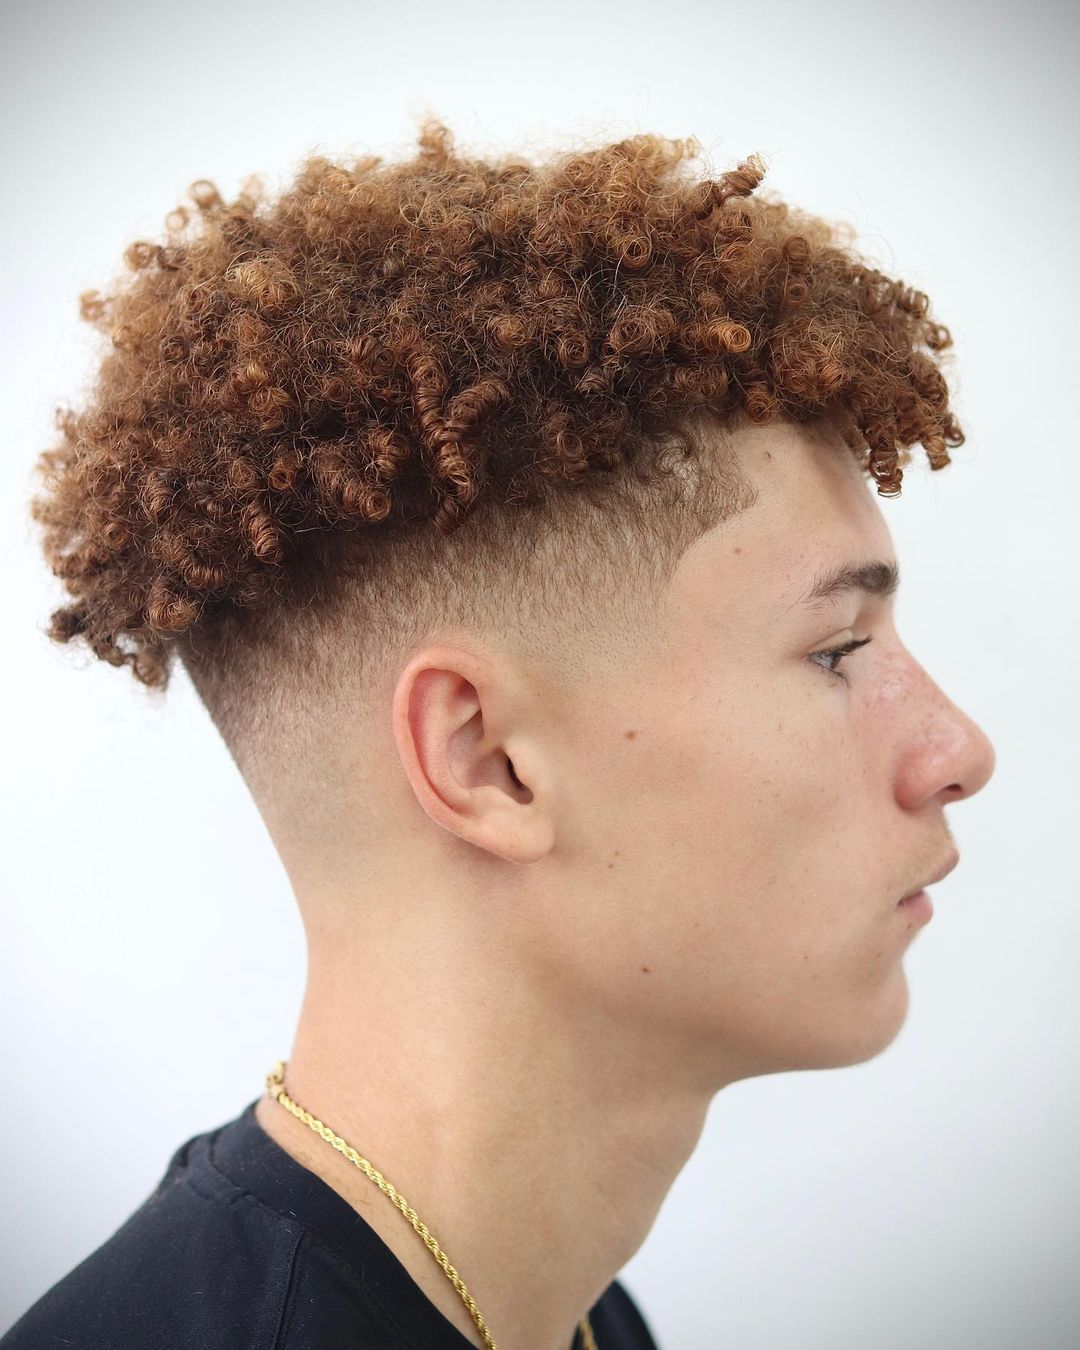 Undercut fade haircut for curly boys teens